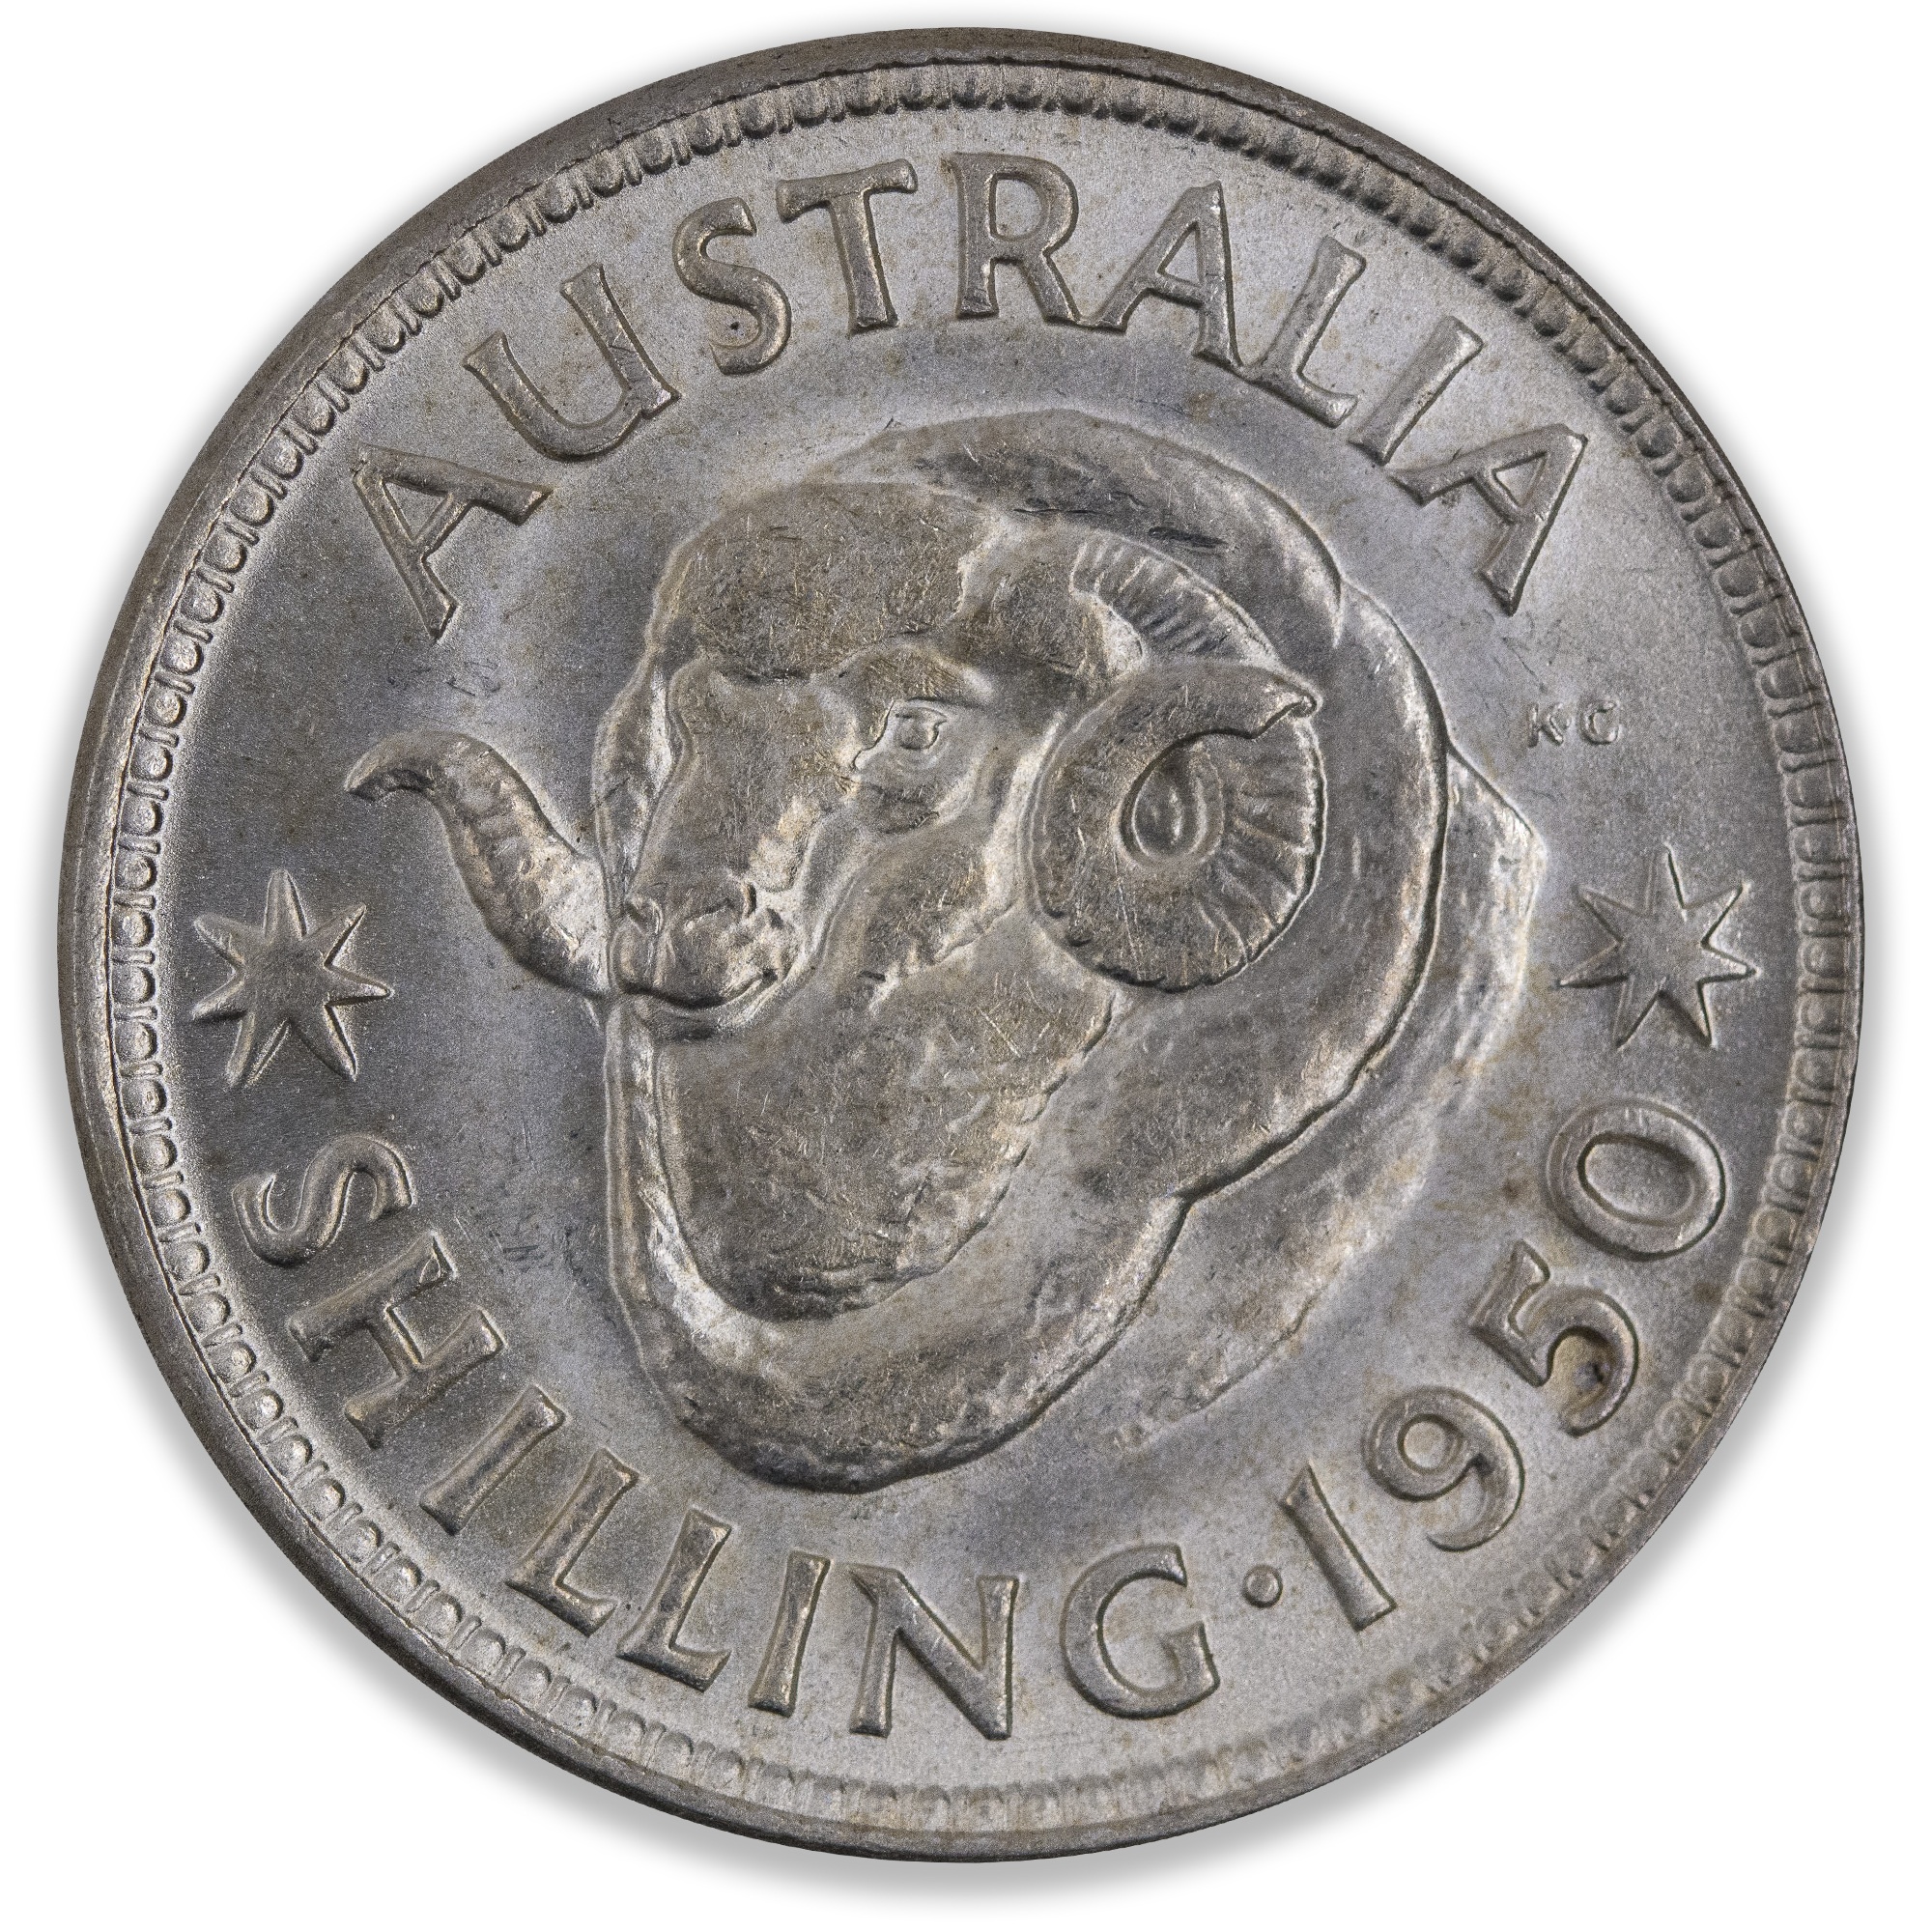 1950 Australian Shilling Uncirculated